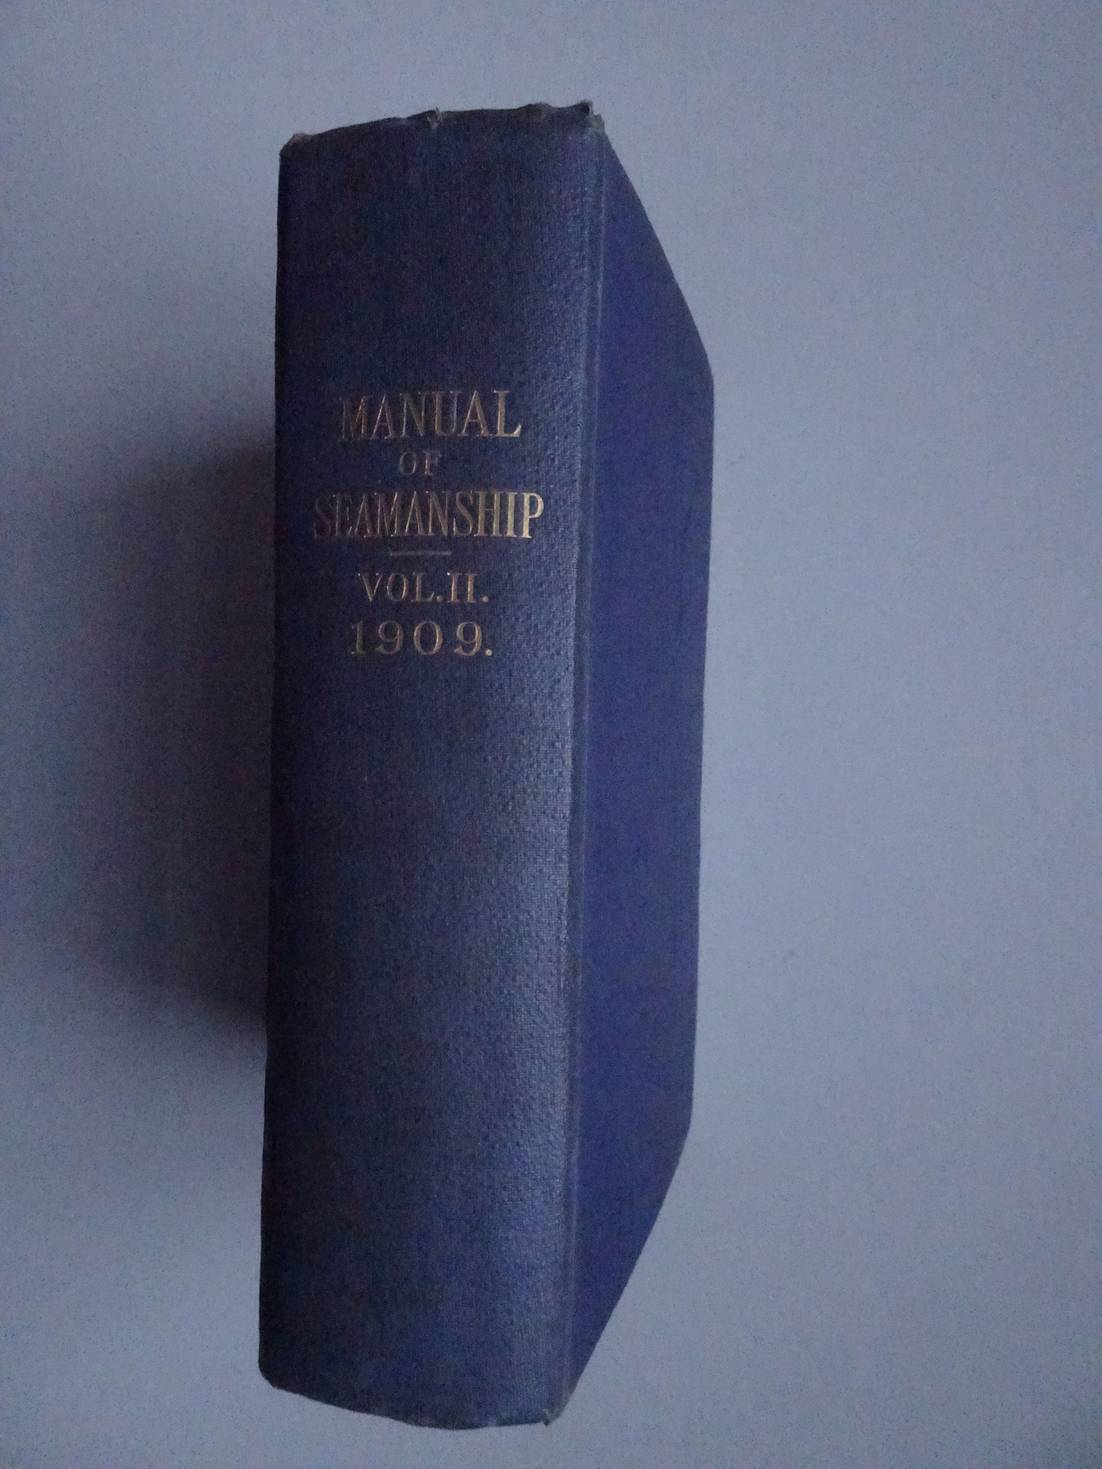 N.n.. - Manual of seamanship Vol. II. 1909.